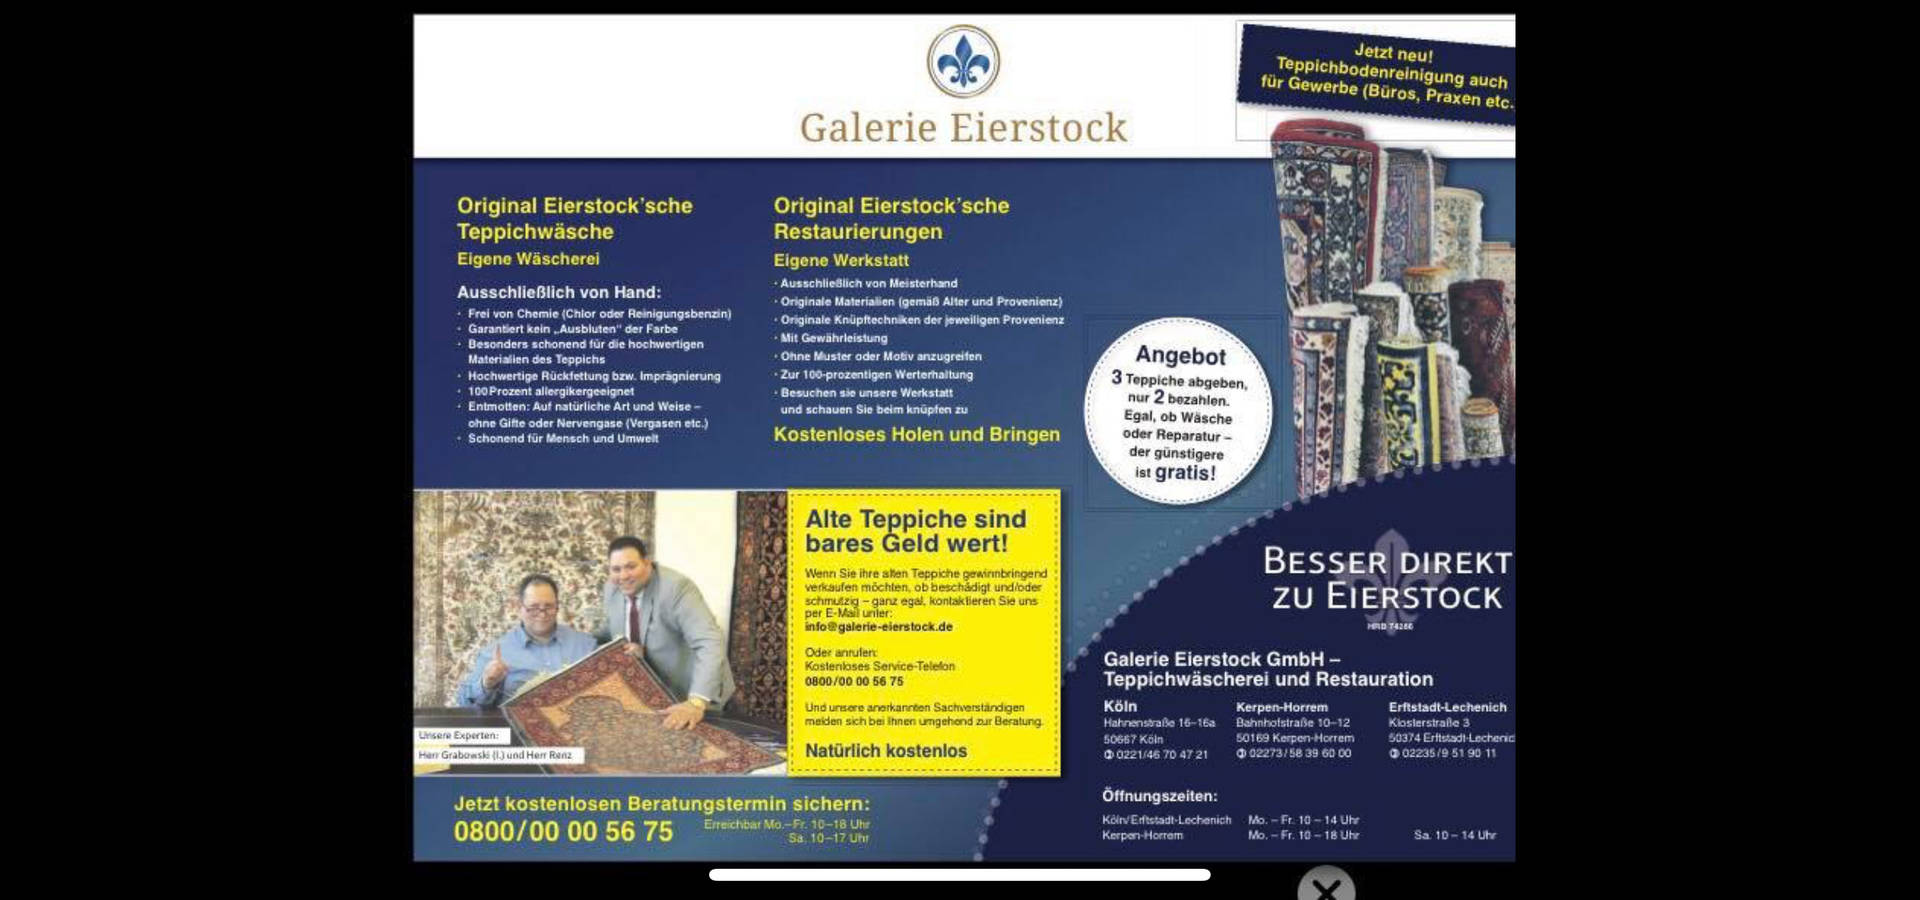 Galerie Eierstock GmbH